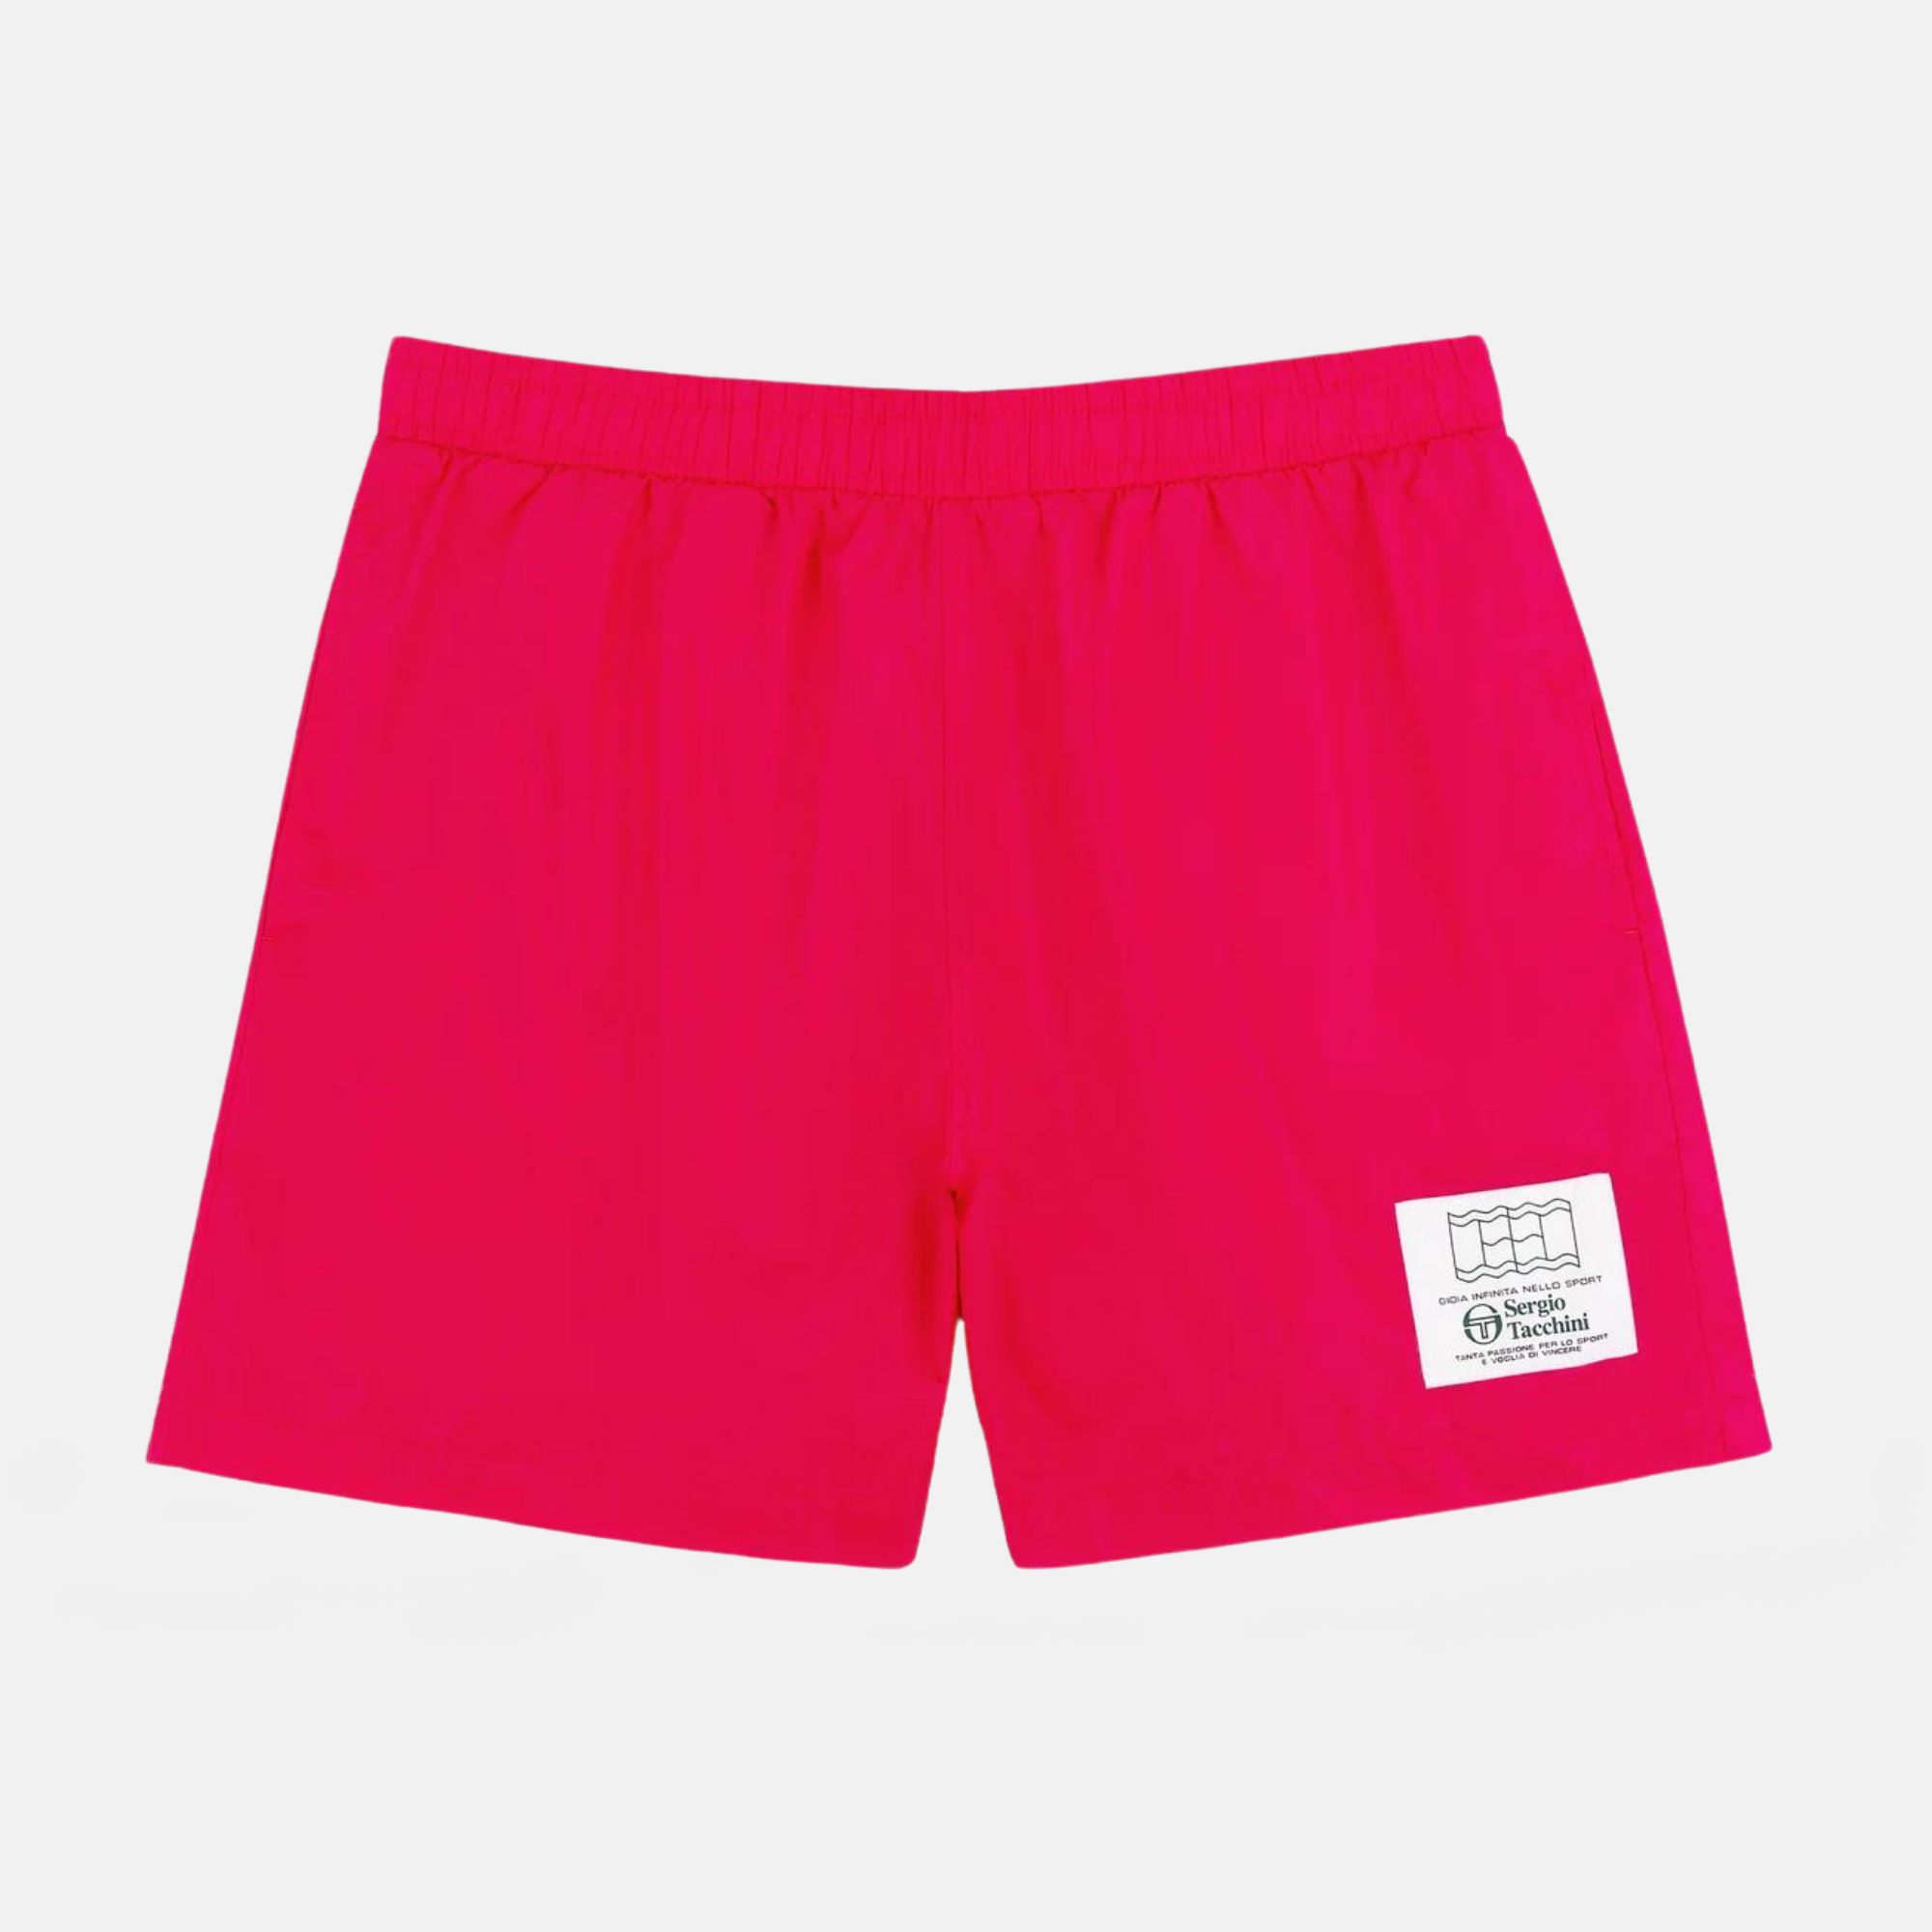 Sergio Tacchini Onda Pink Shorts